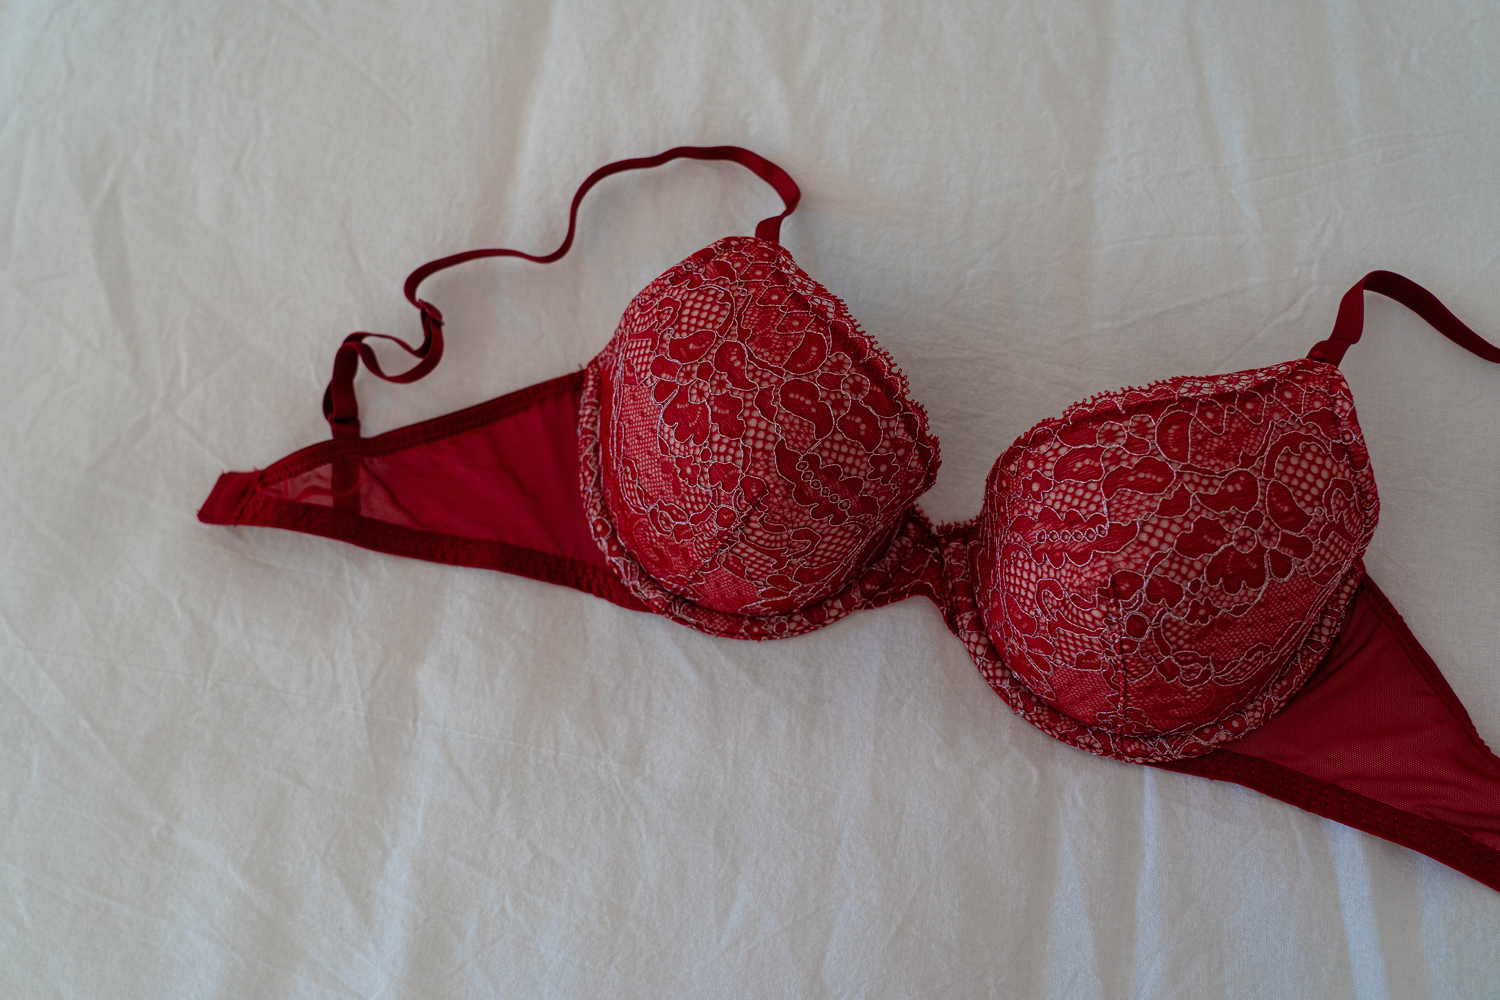 red bra on white bedding